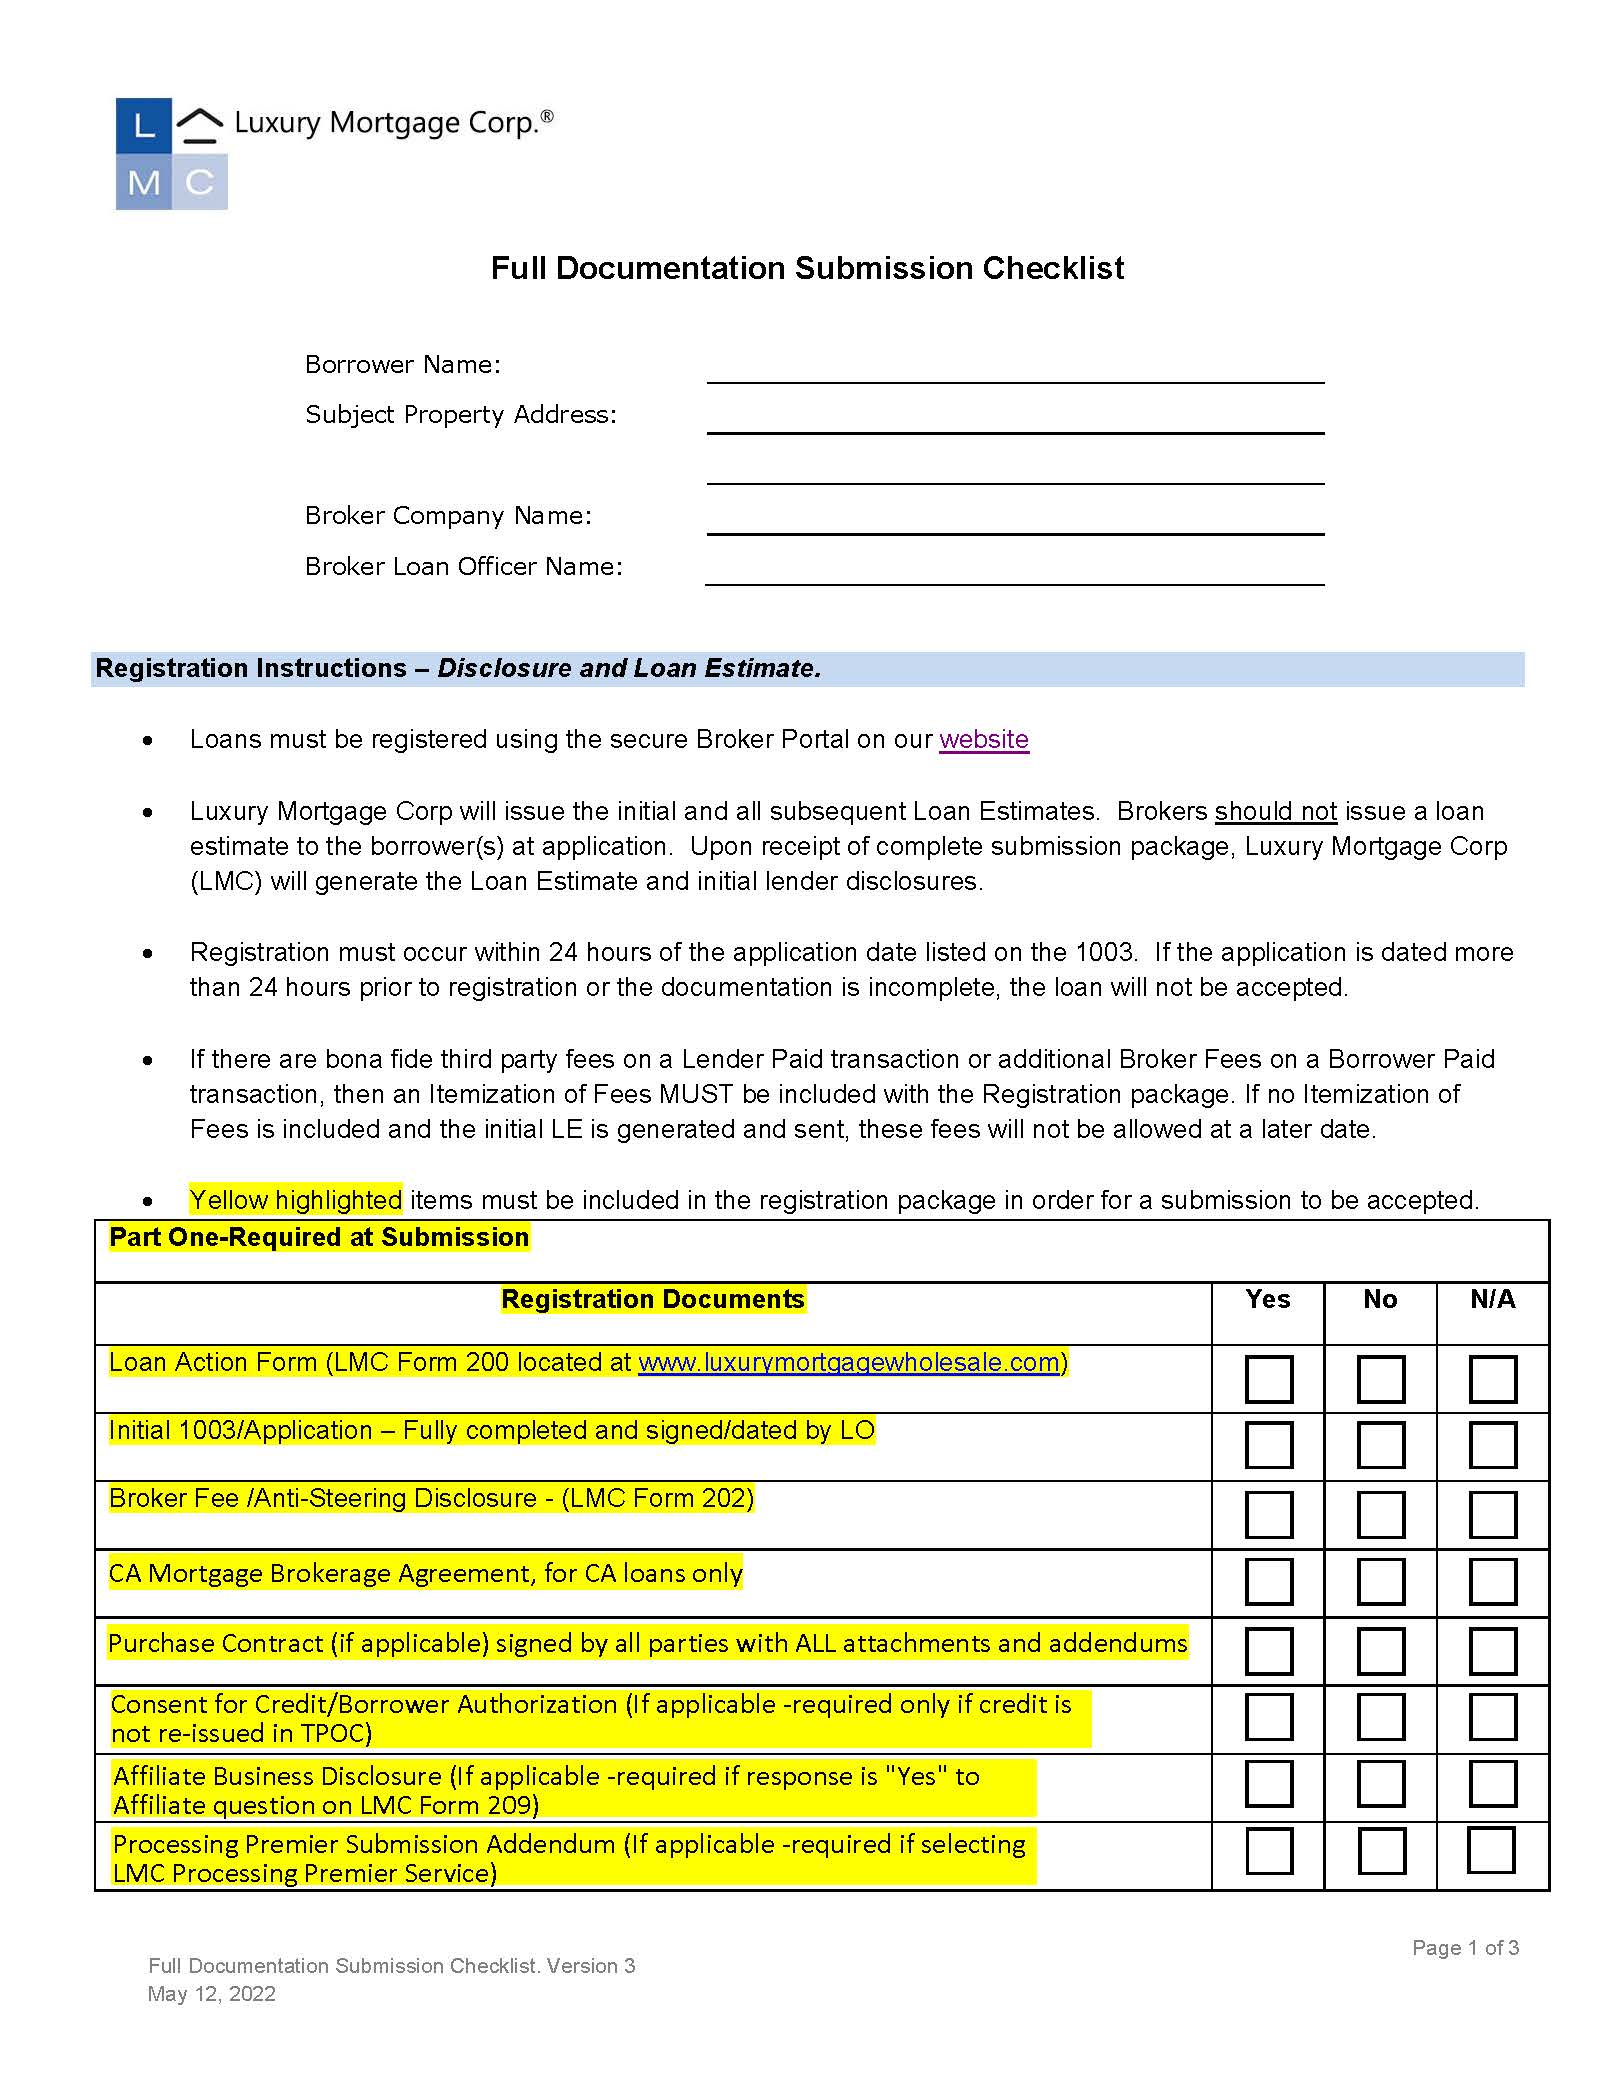 Full Documentation Submission Checklist V.3